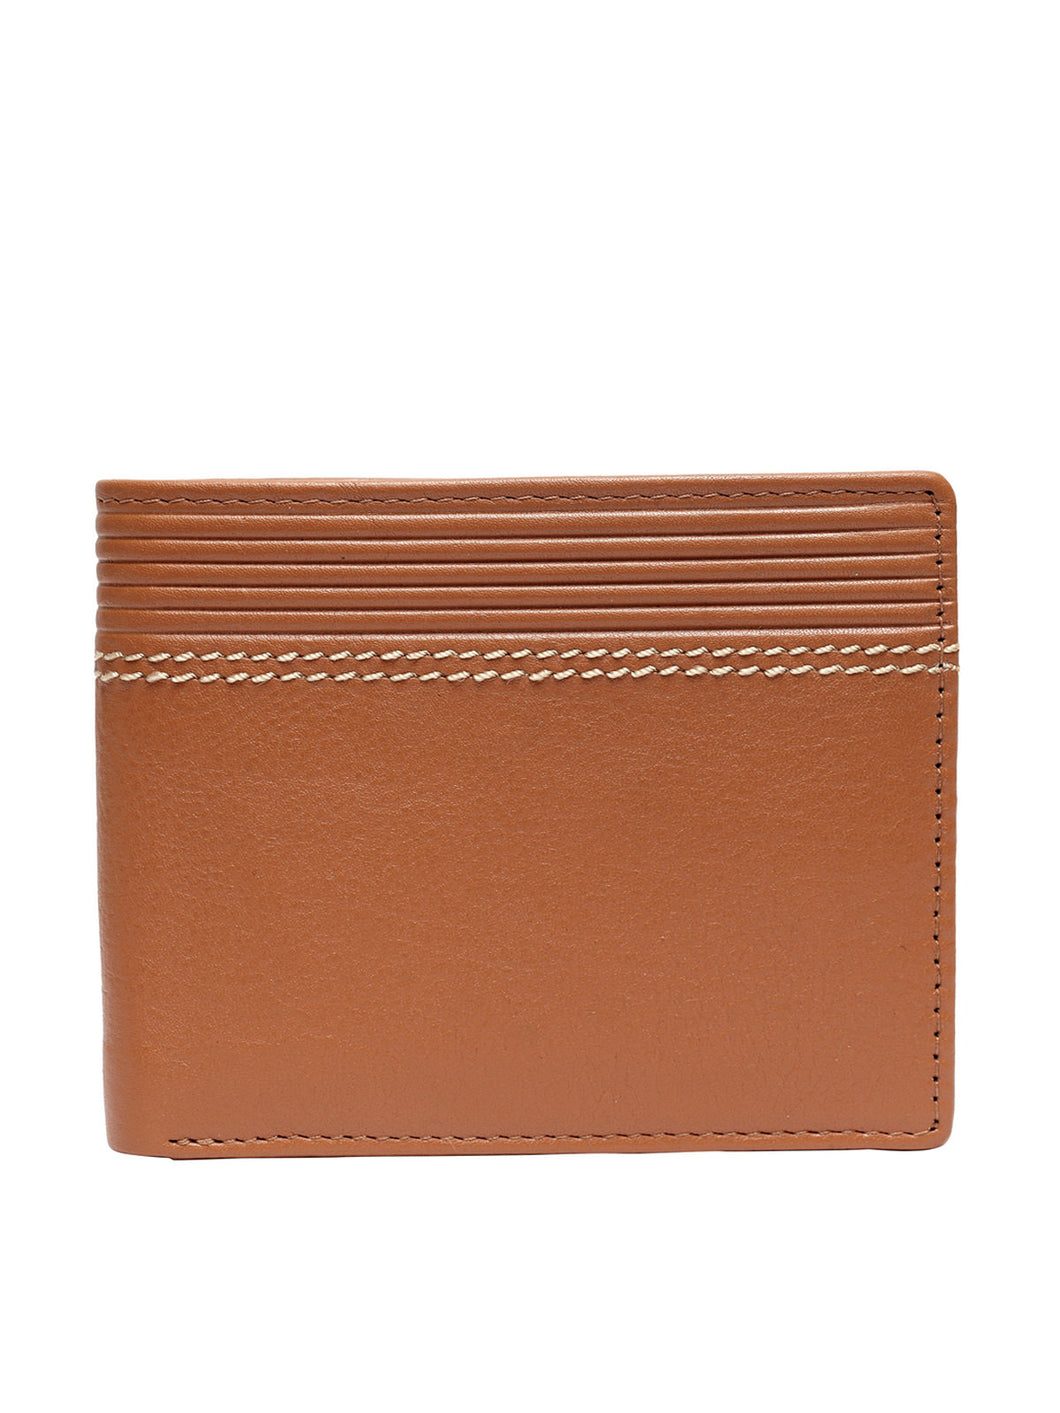 Teakwood Genuine Leather Wallets - Tan